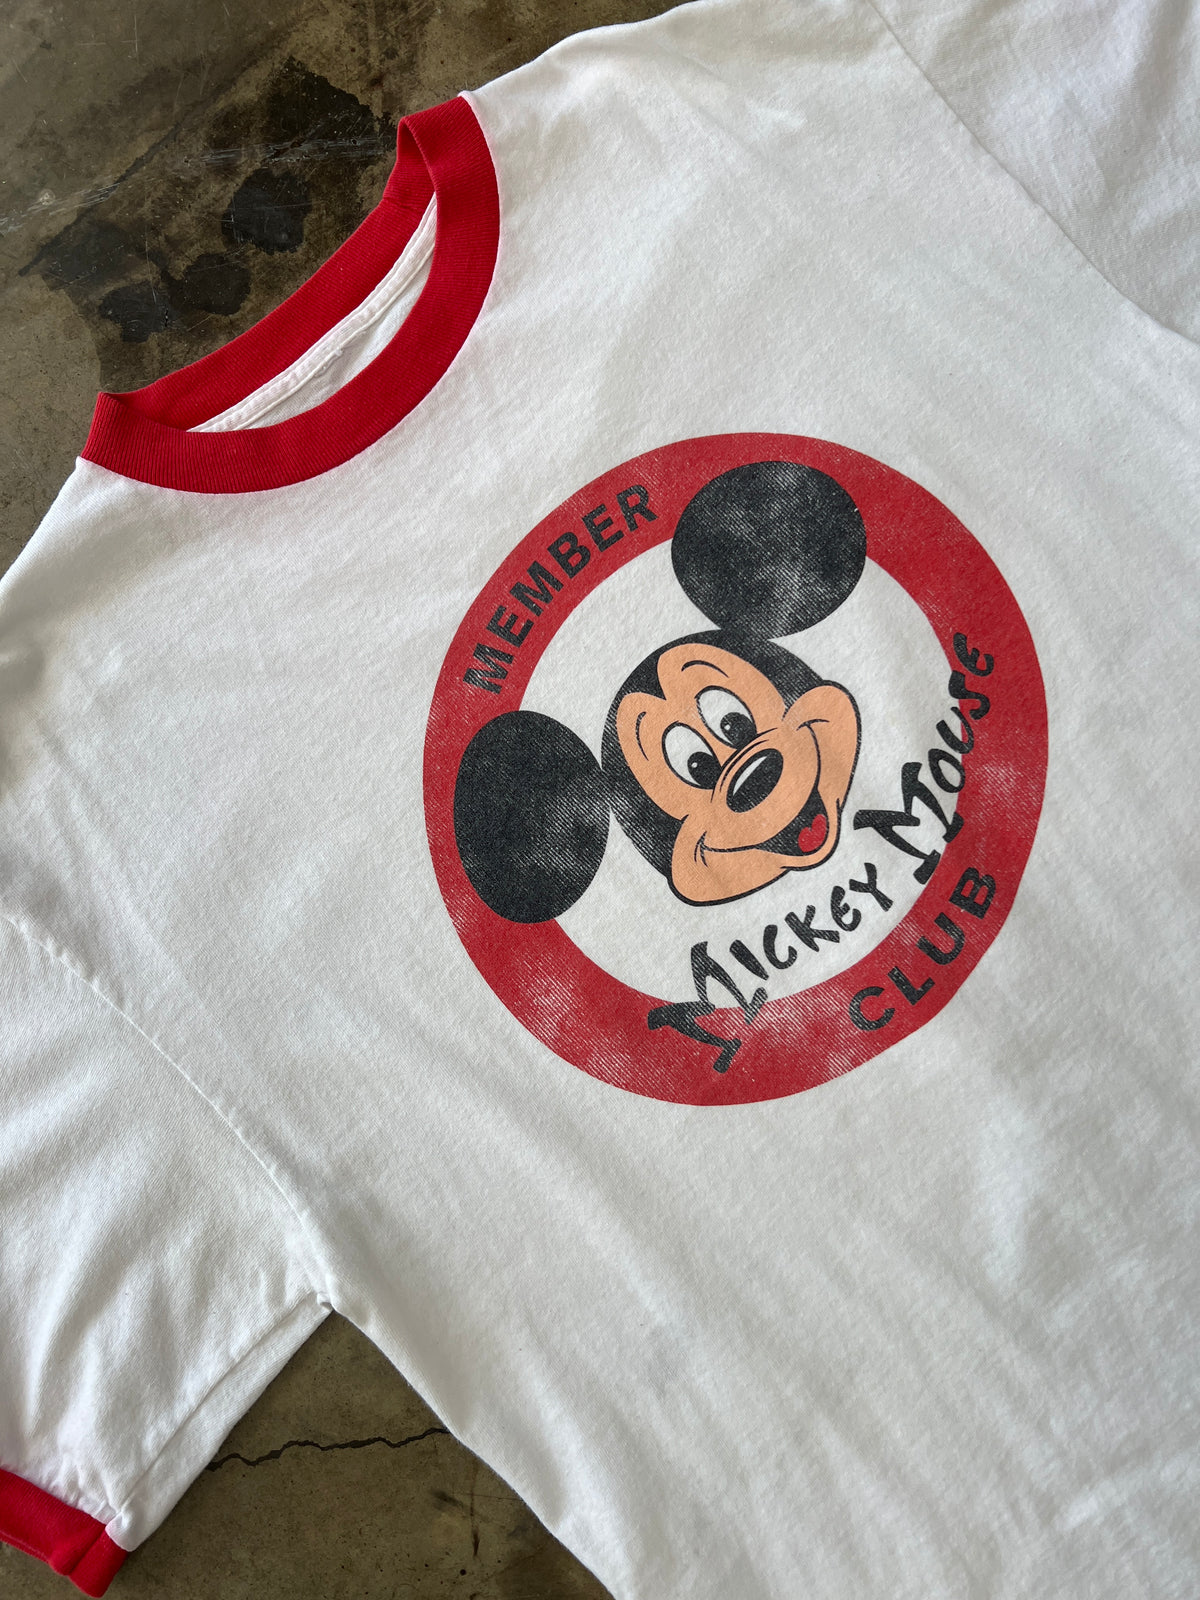 Disney Mickey Mouse Club Member Tee